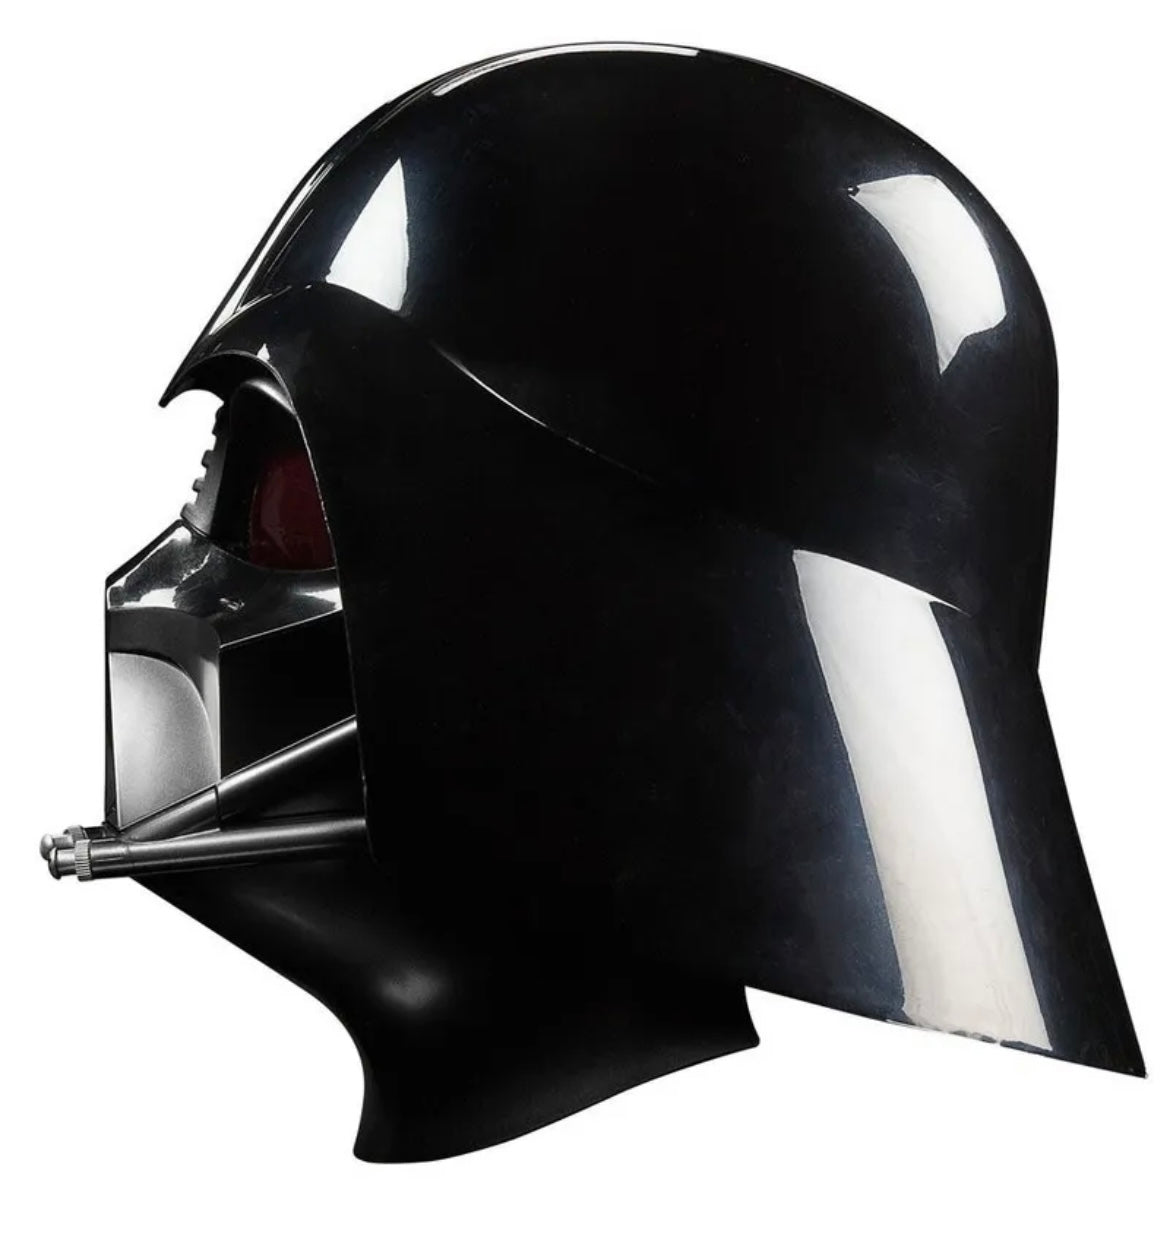 STAR WARS - Black series - Casque électronique DARTH VADER helmet